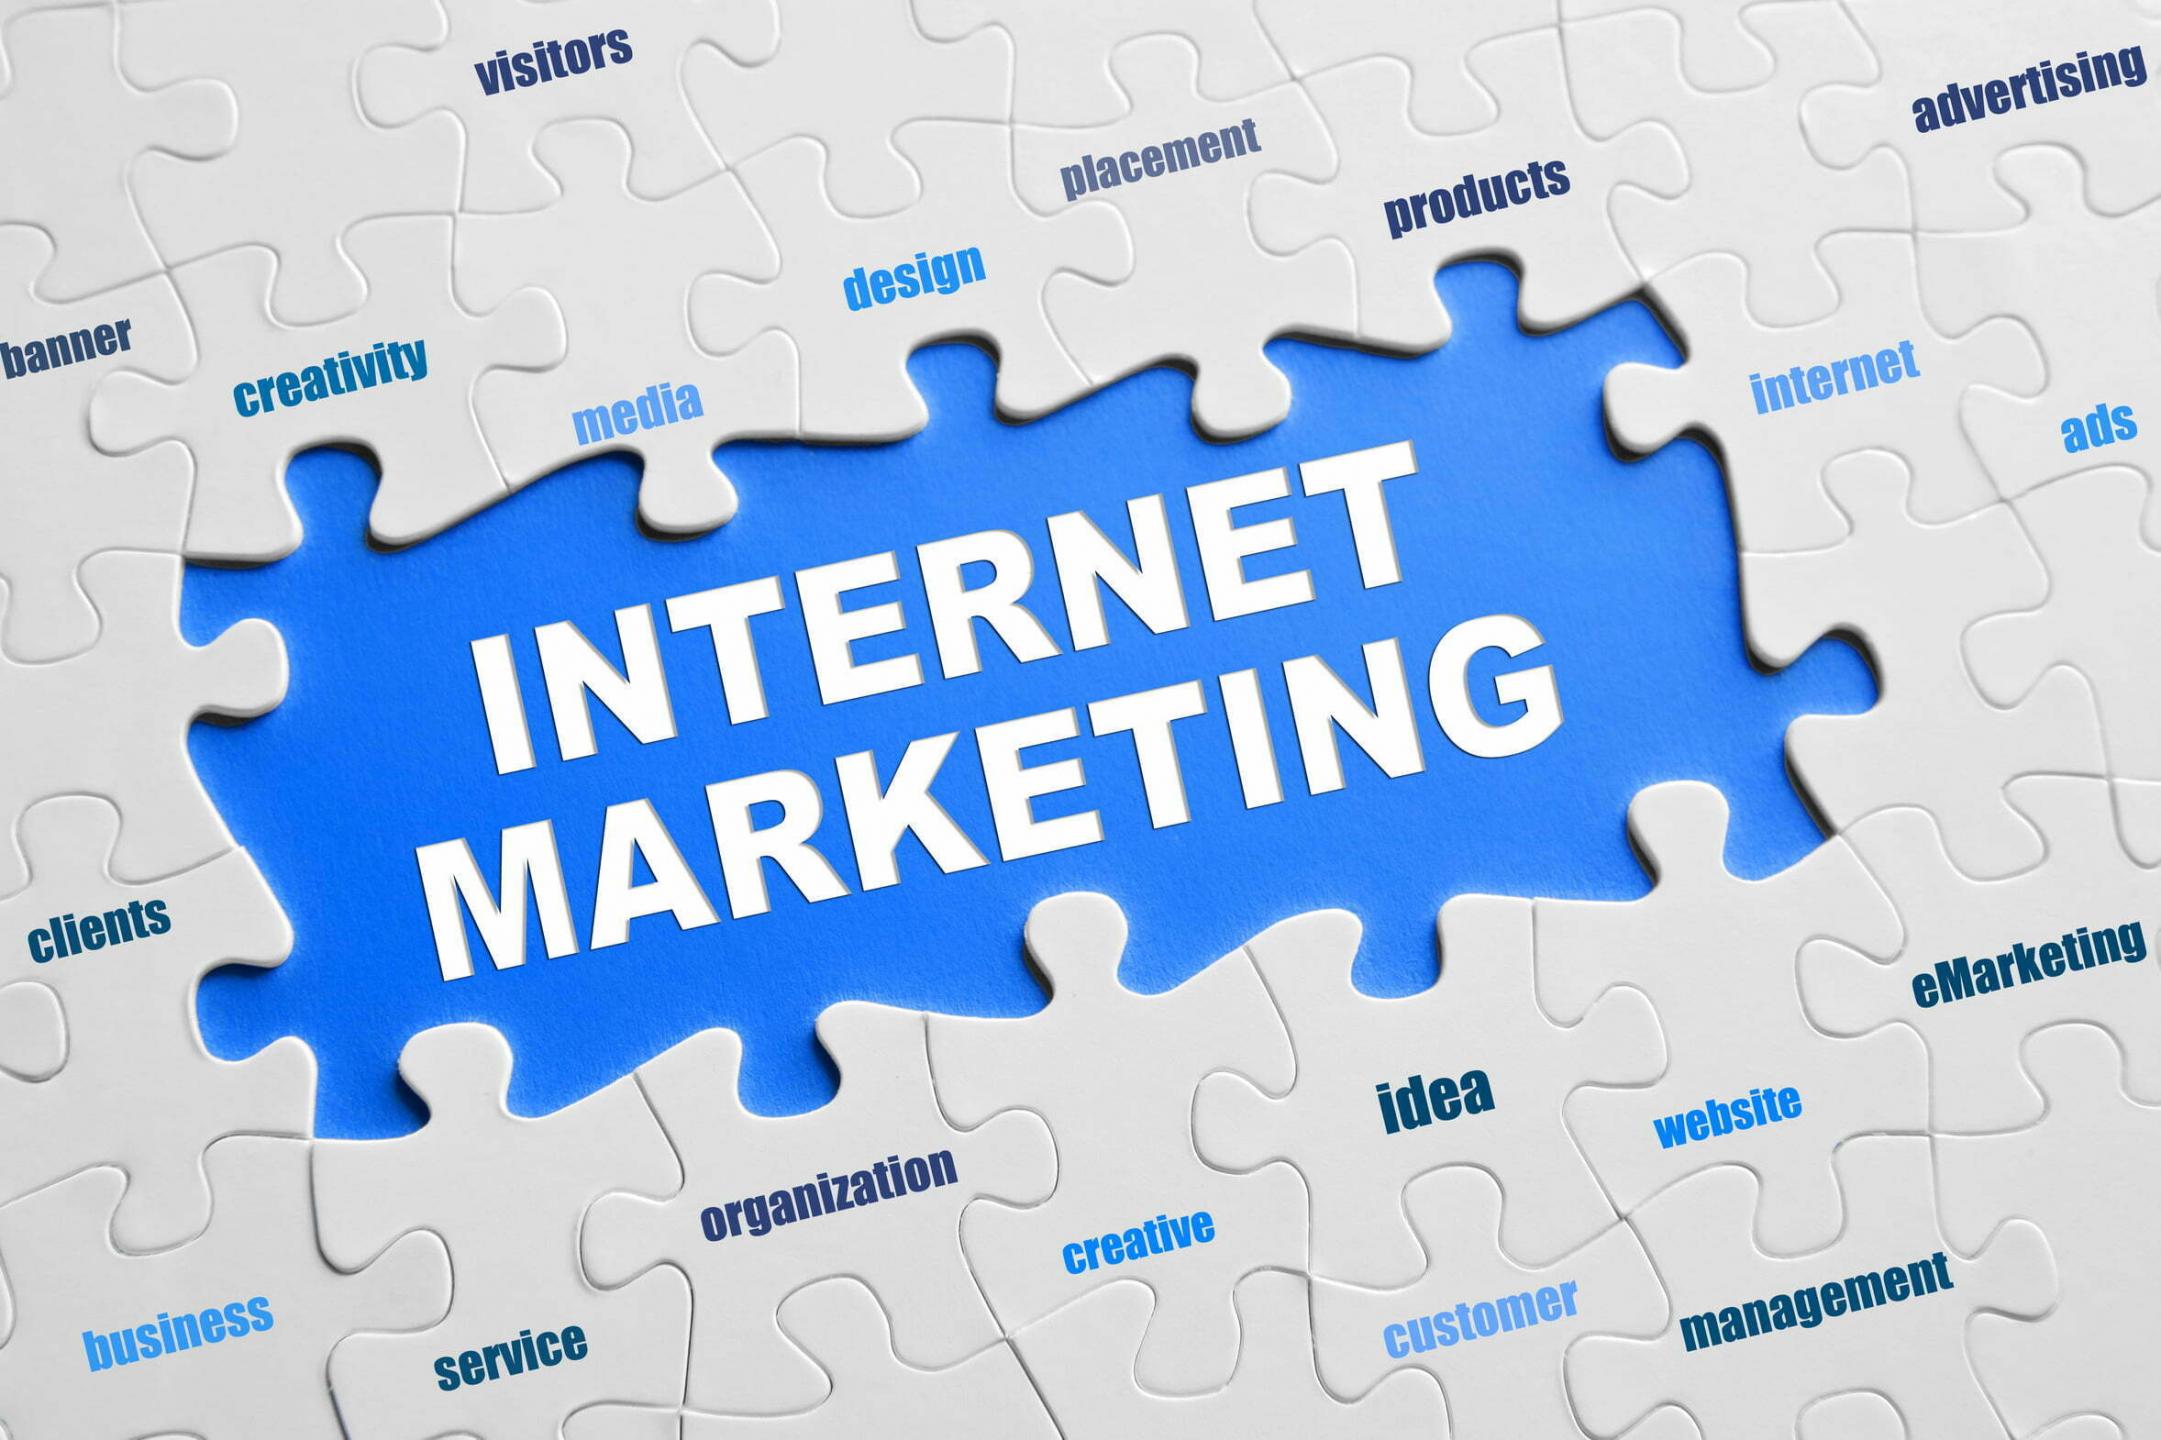 Internet Marketing Company In Delhi